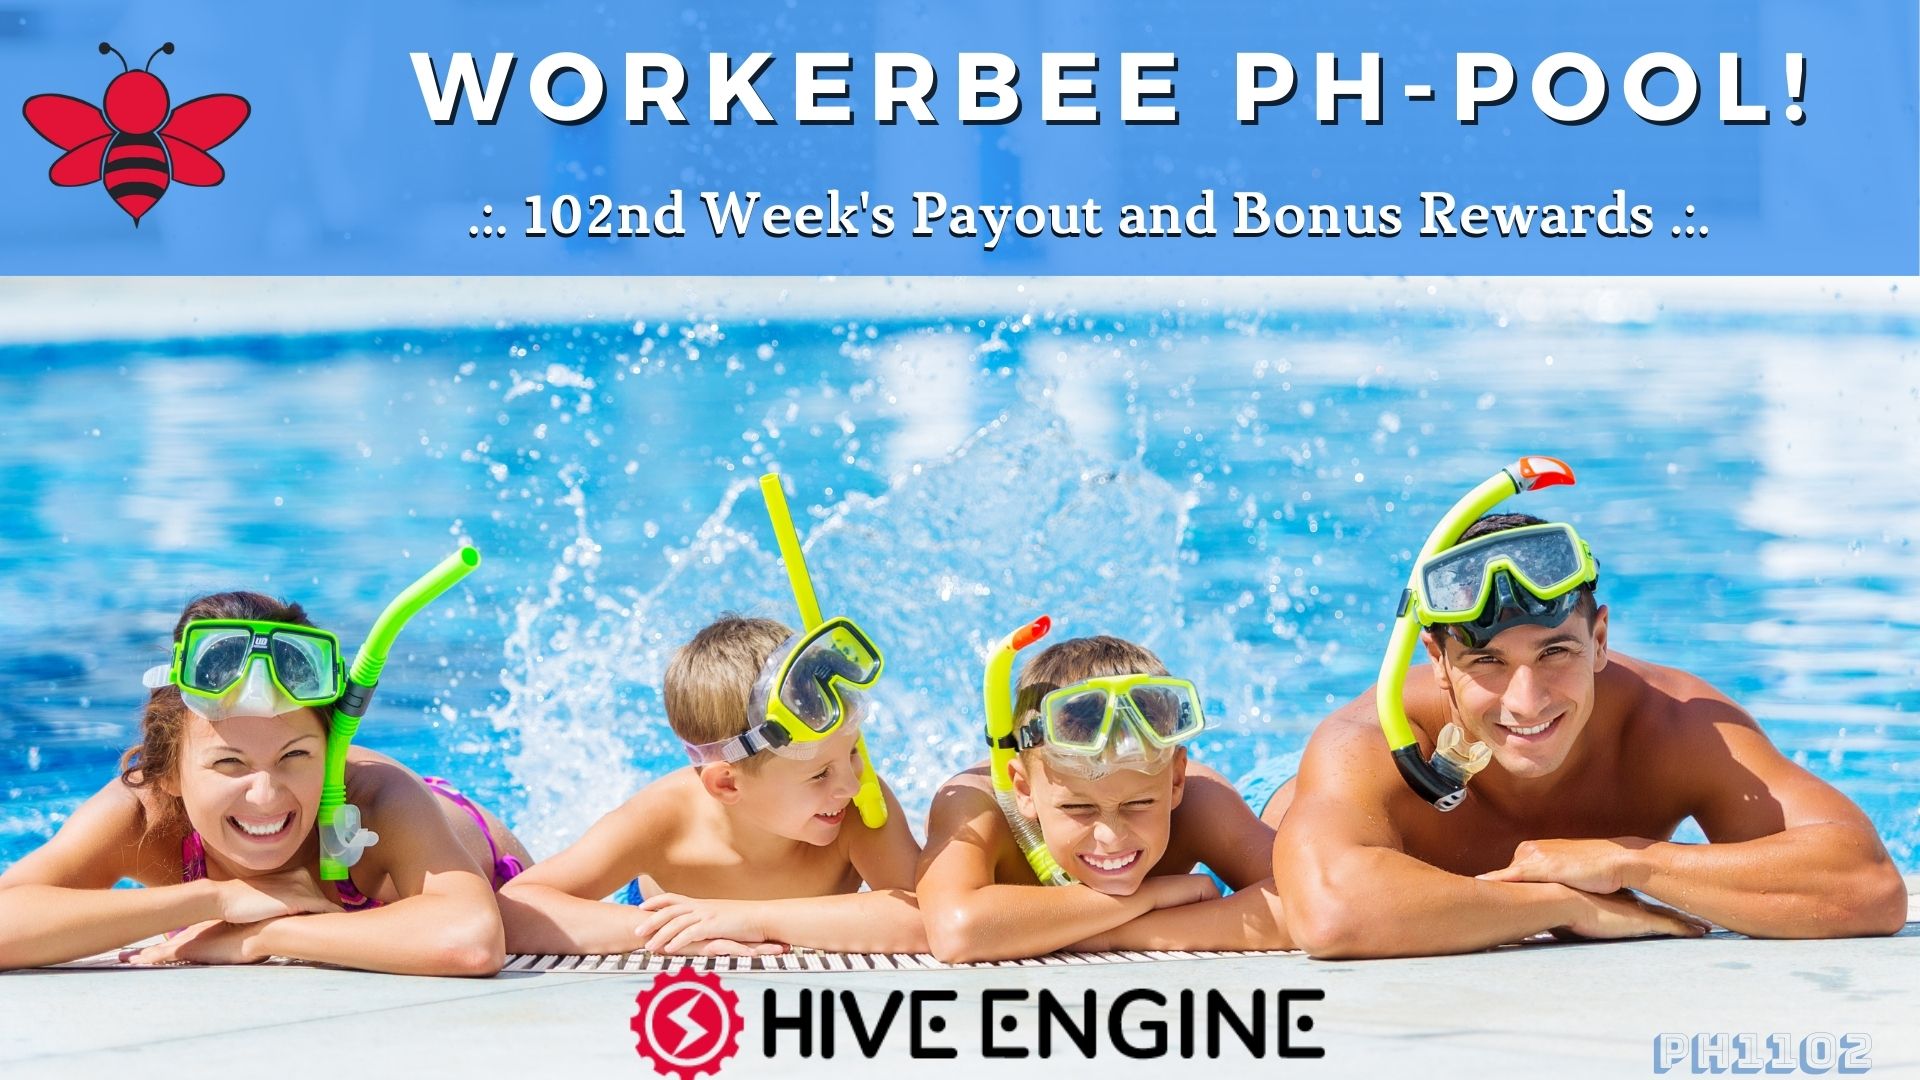 @ph1102/wakey-wakey-rise-and-shine-workerbee-ph-pool-week-102